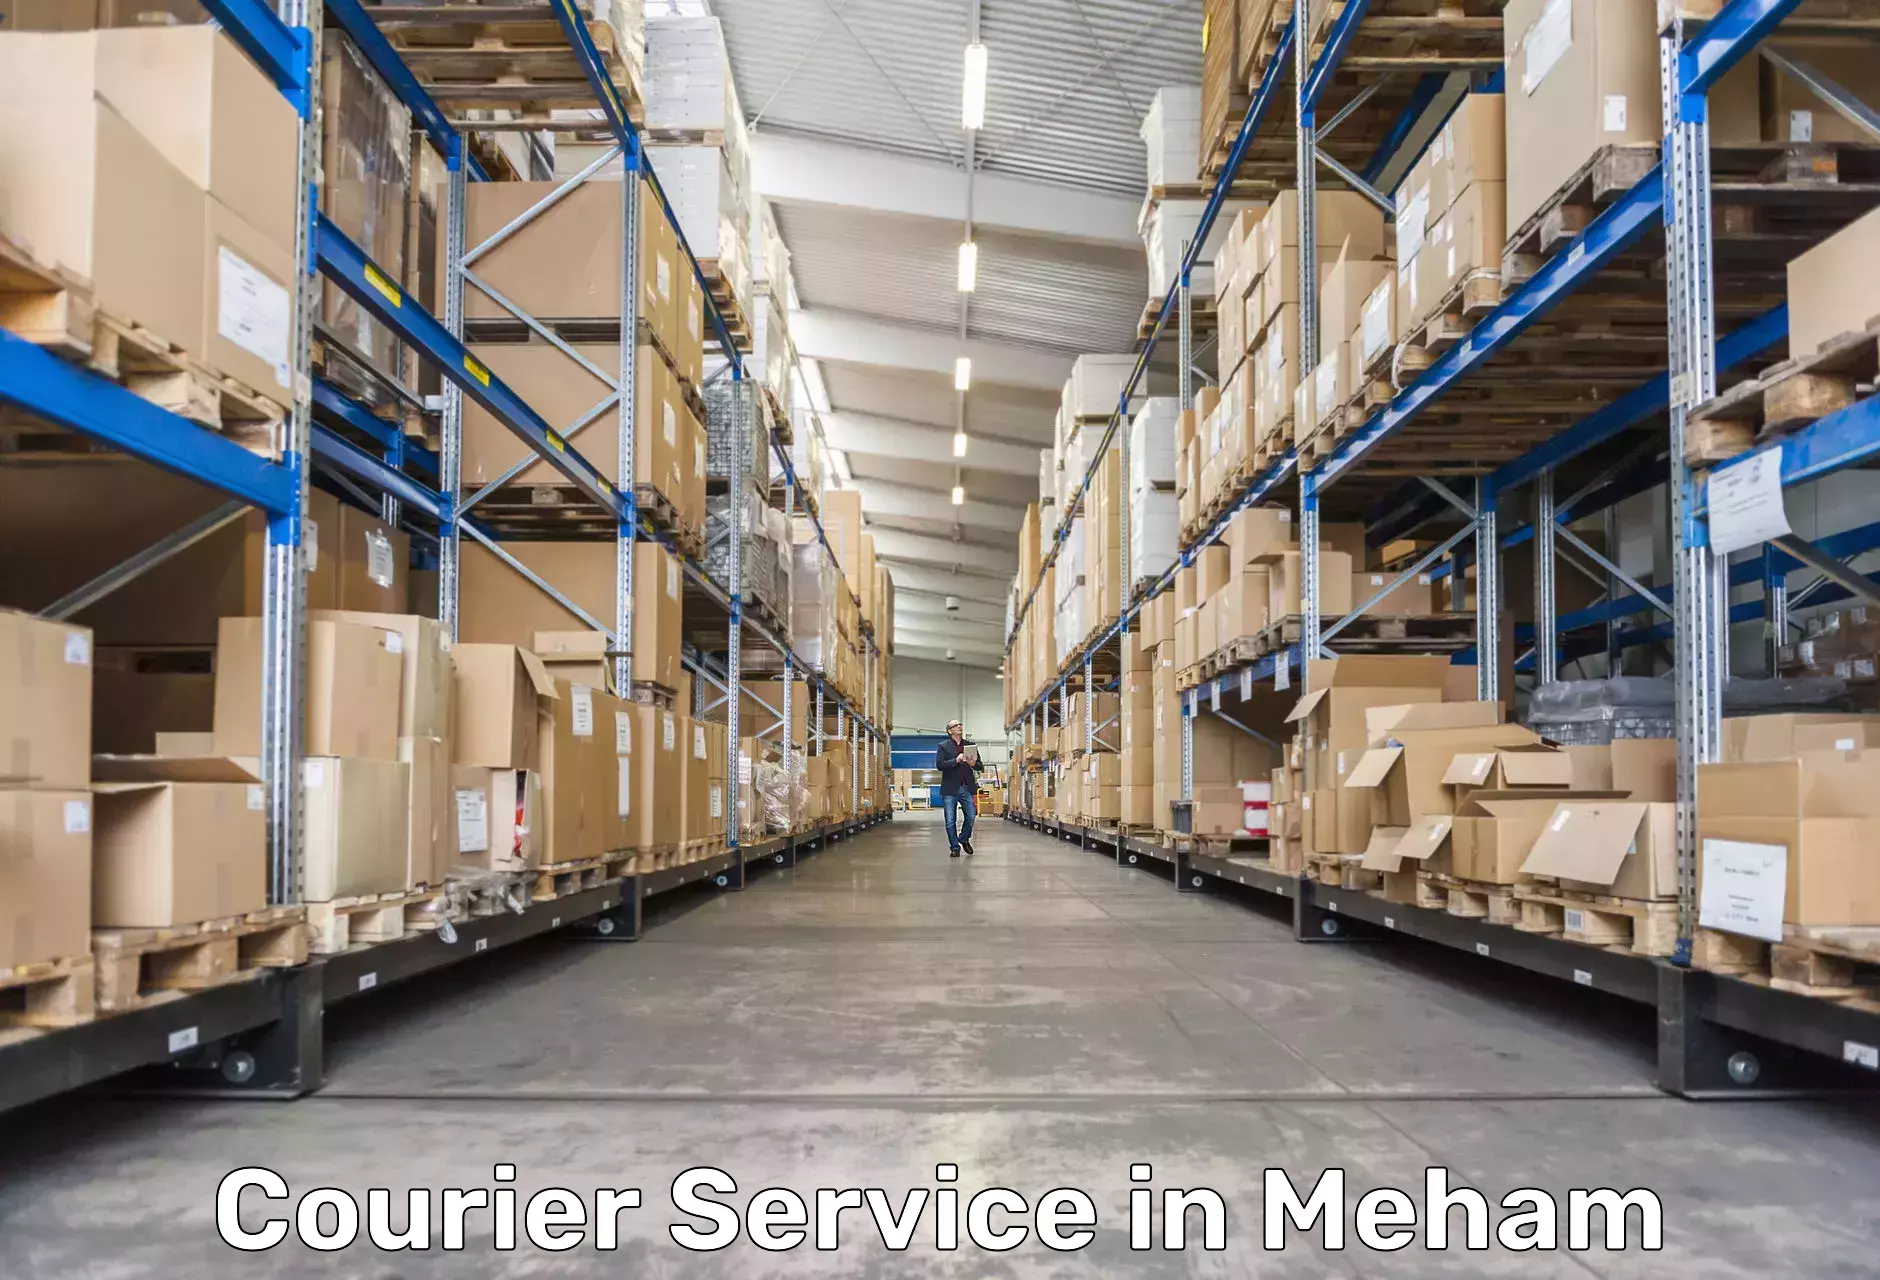 Efficient parcel delivery in Meham